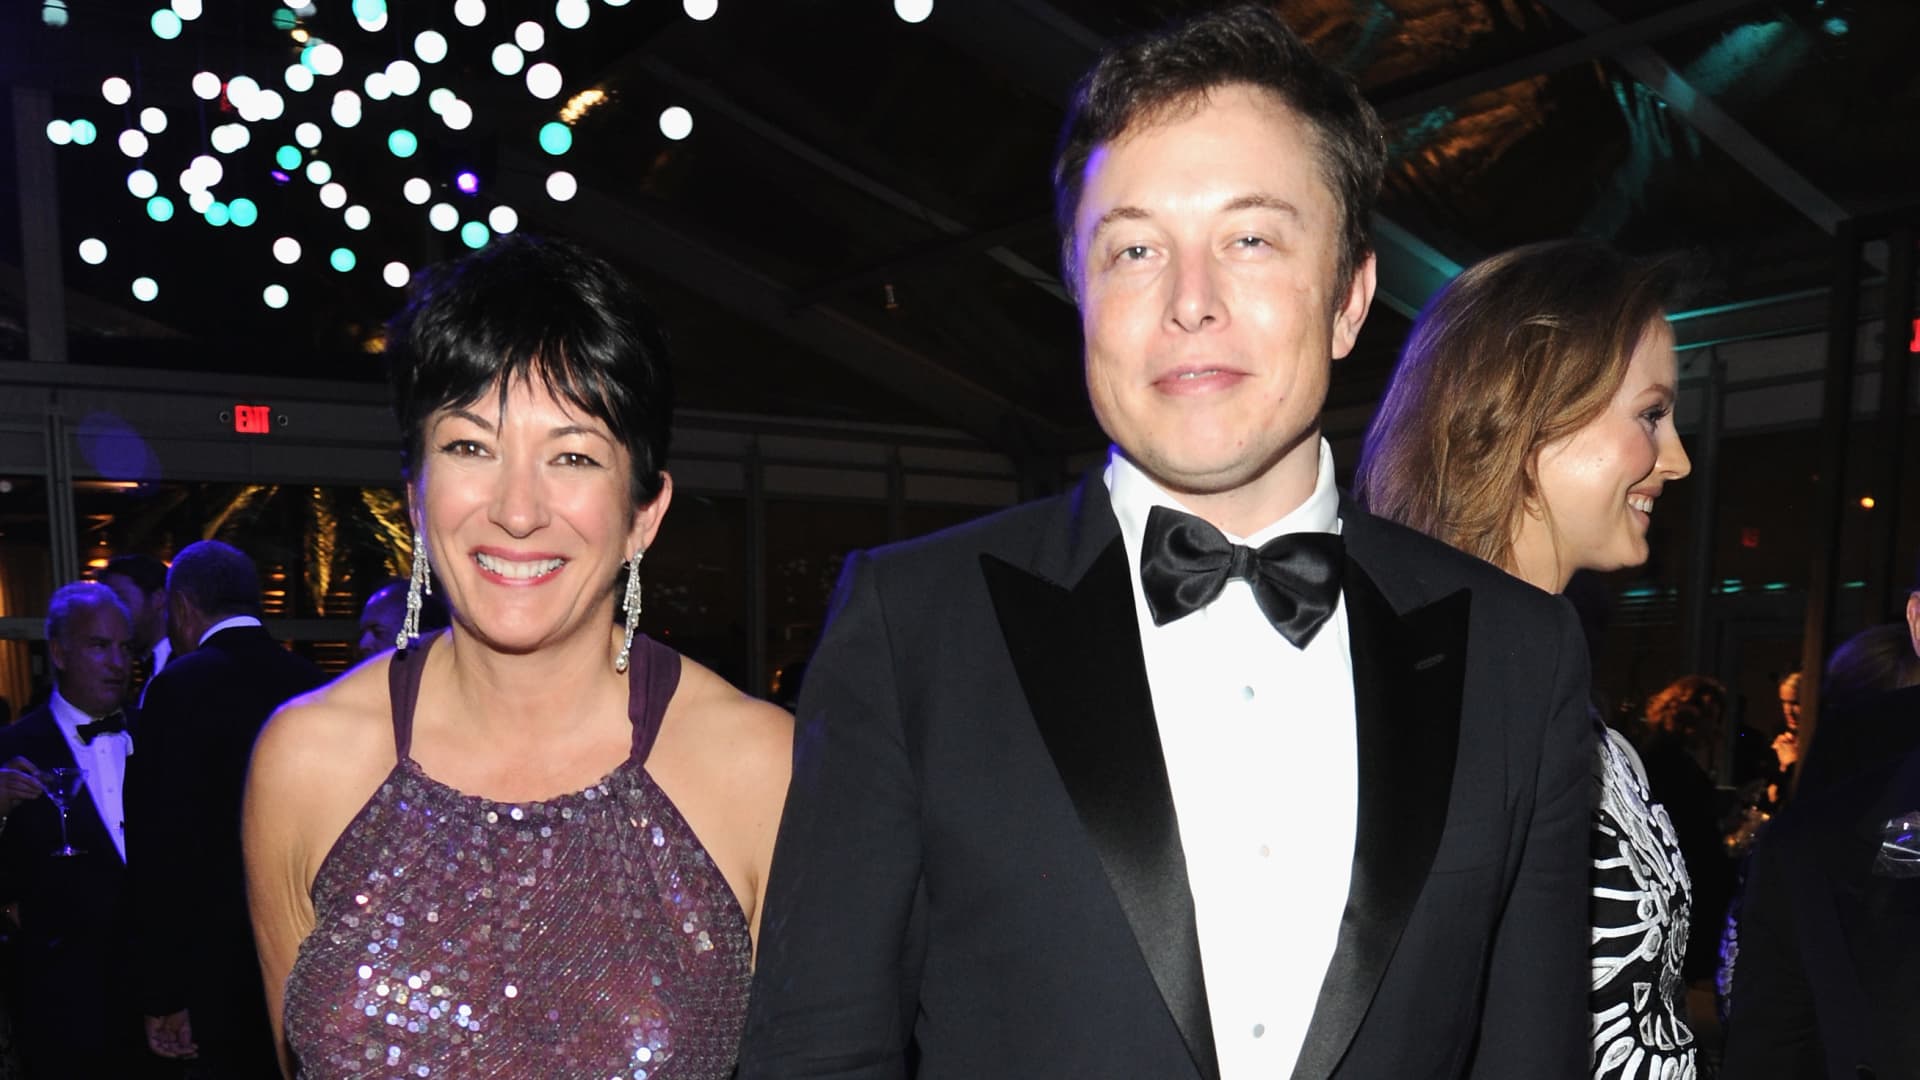 Elon Musk subpoena in Epstein-JPMorgan lawsuit can be served to Tesla, judge rules